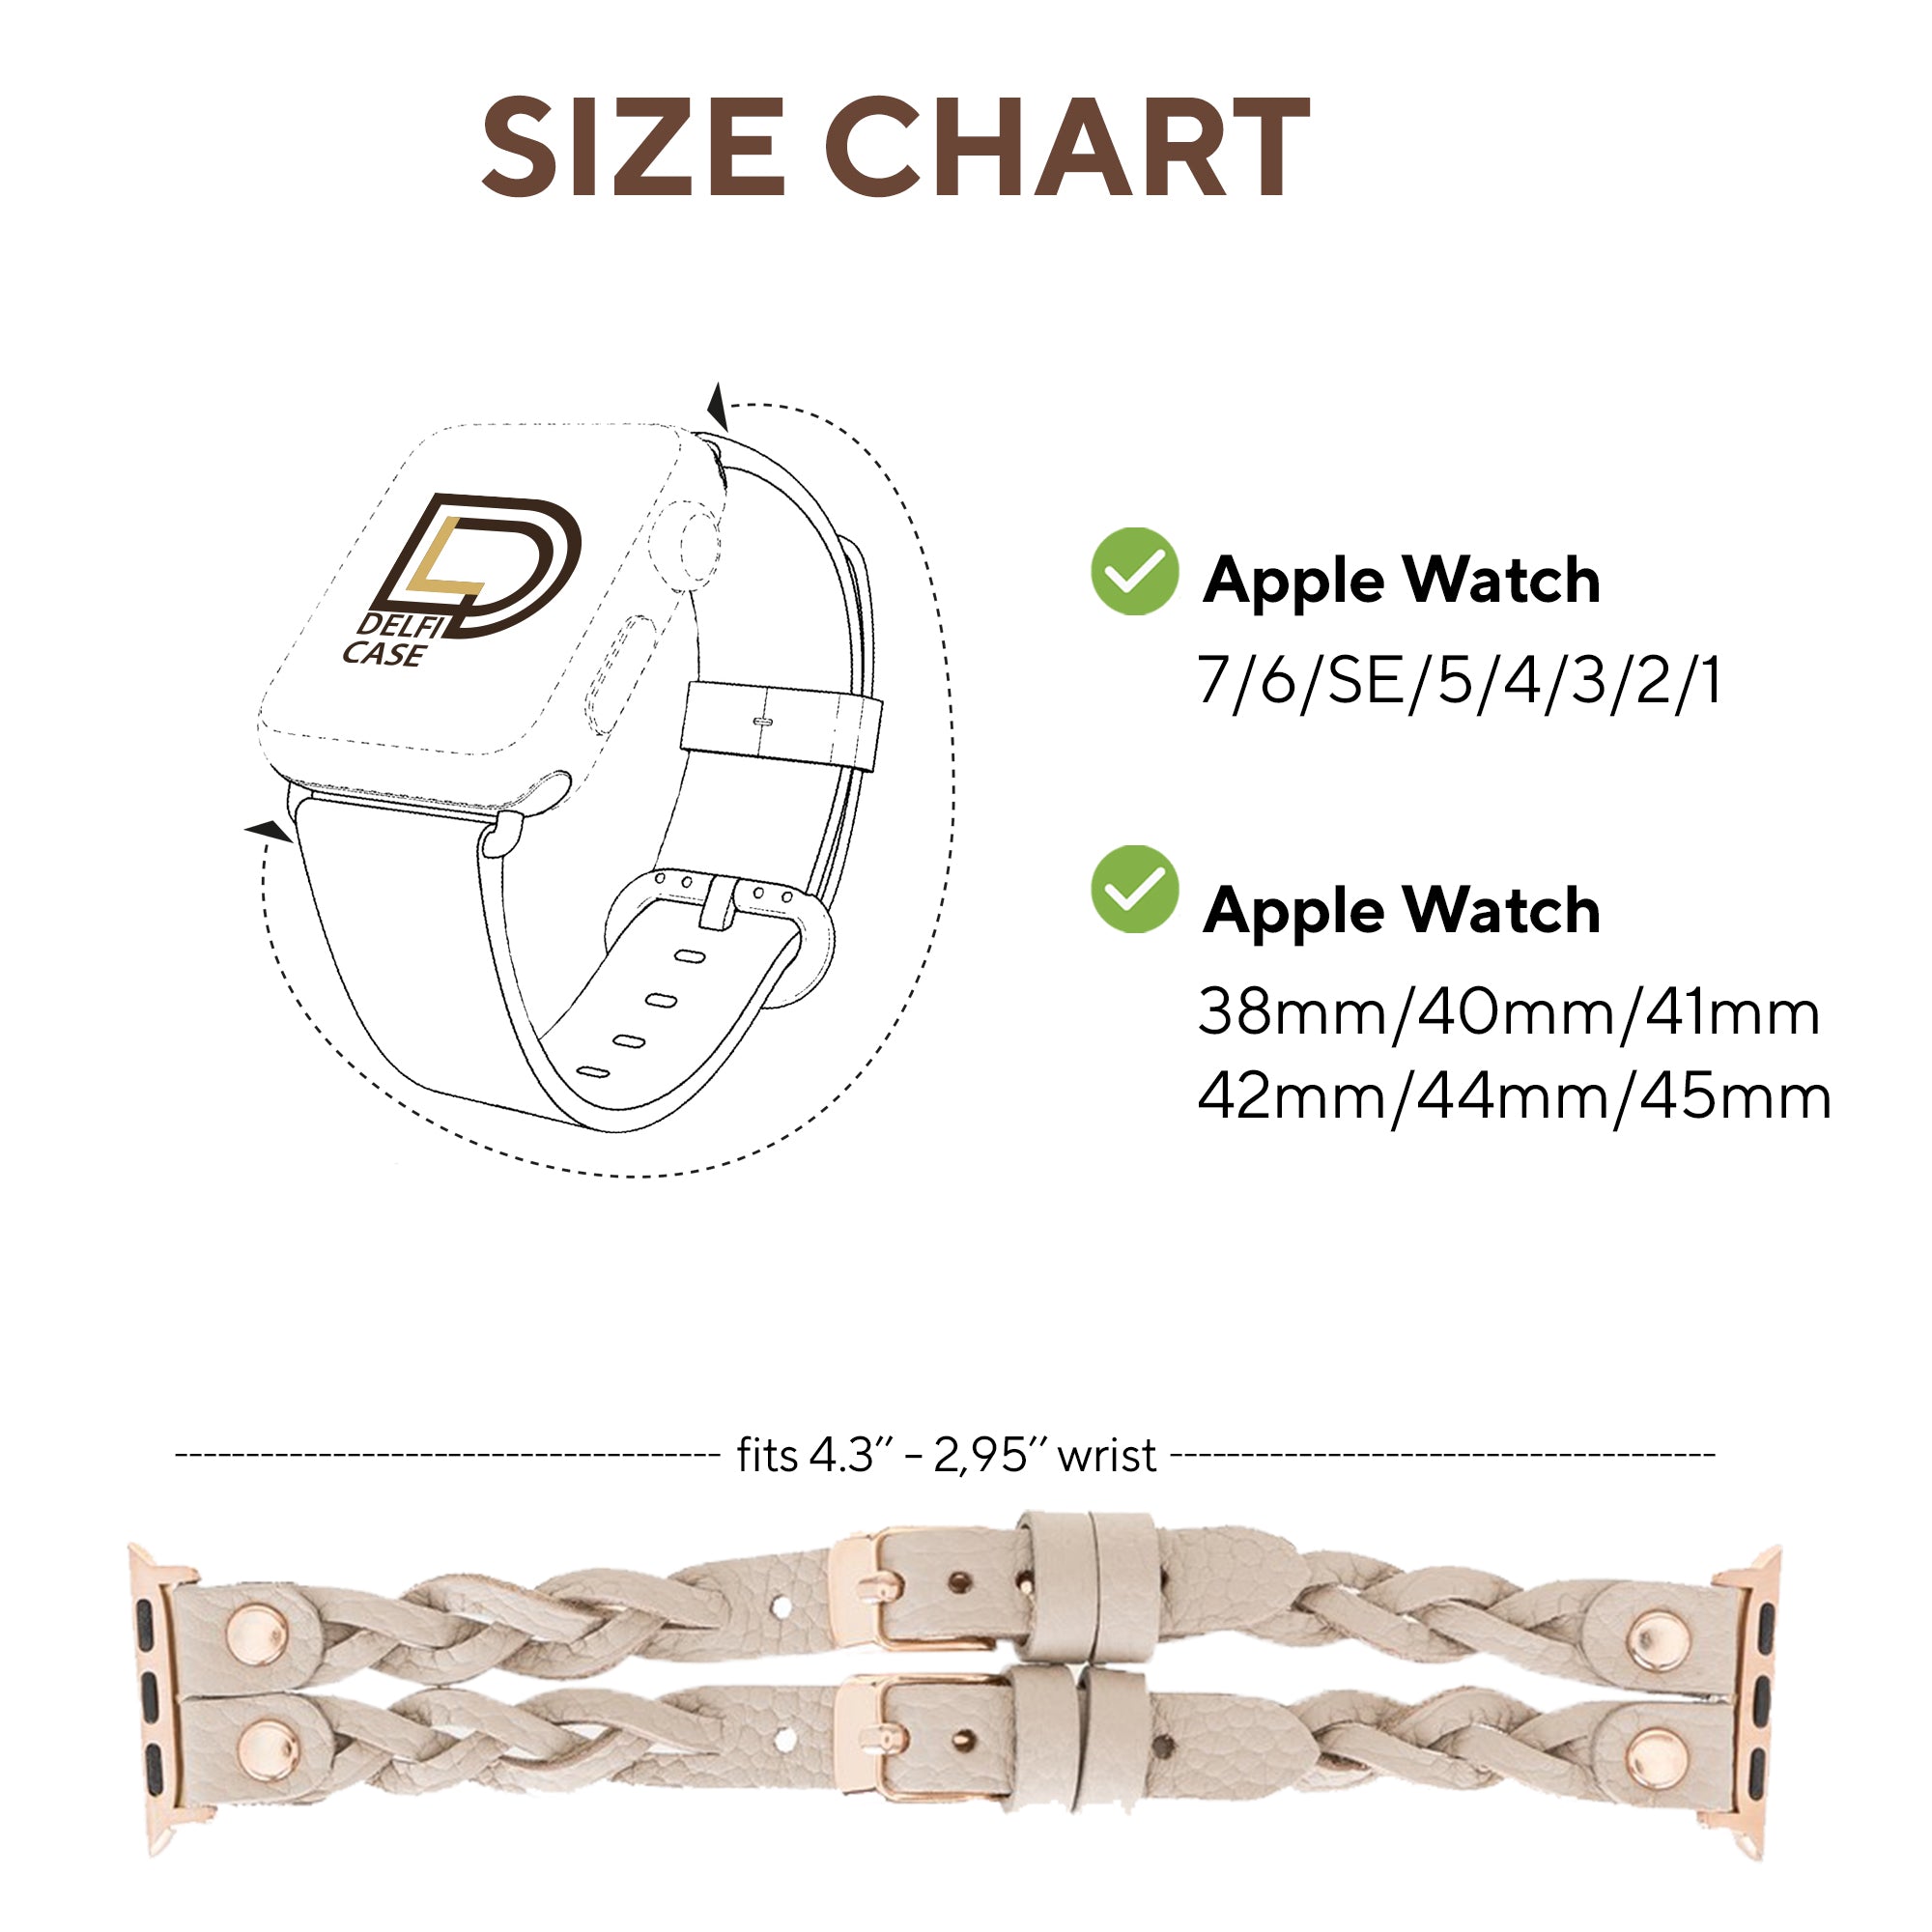 DelfiCase Sheffield-York Double Apple Watch Band for Apple Watch & Fitbit/Sense 20